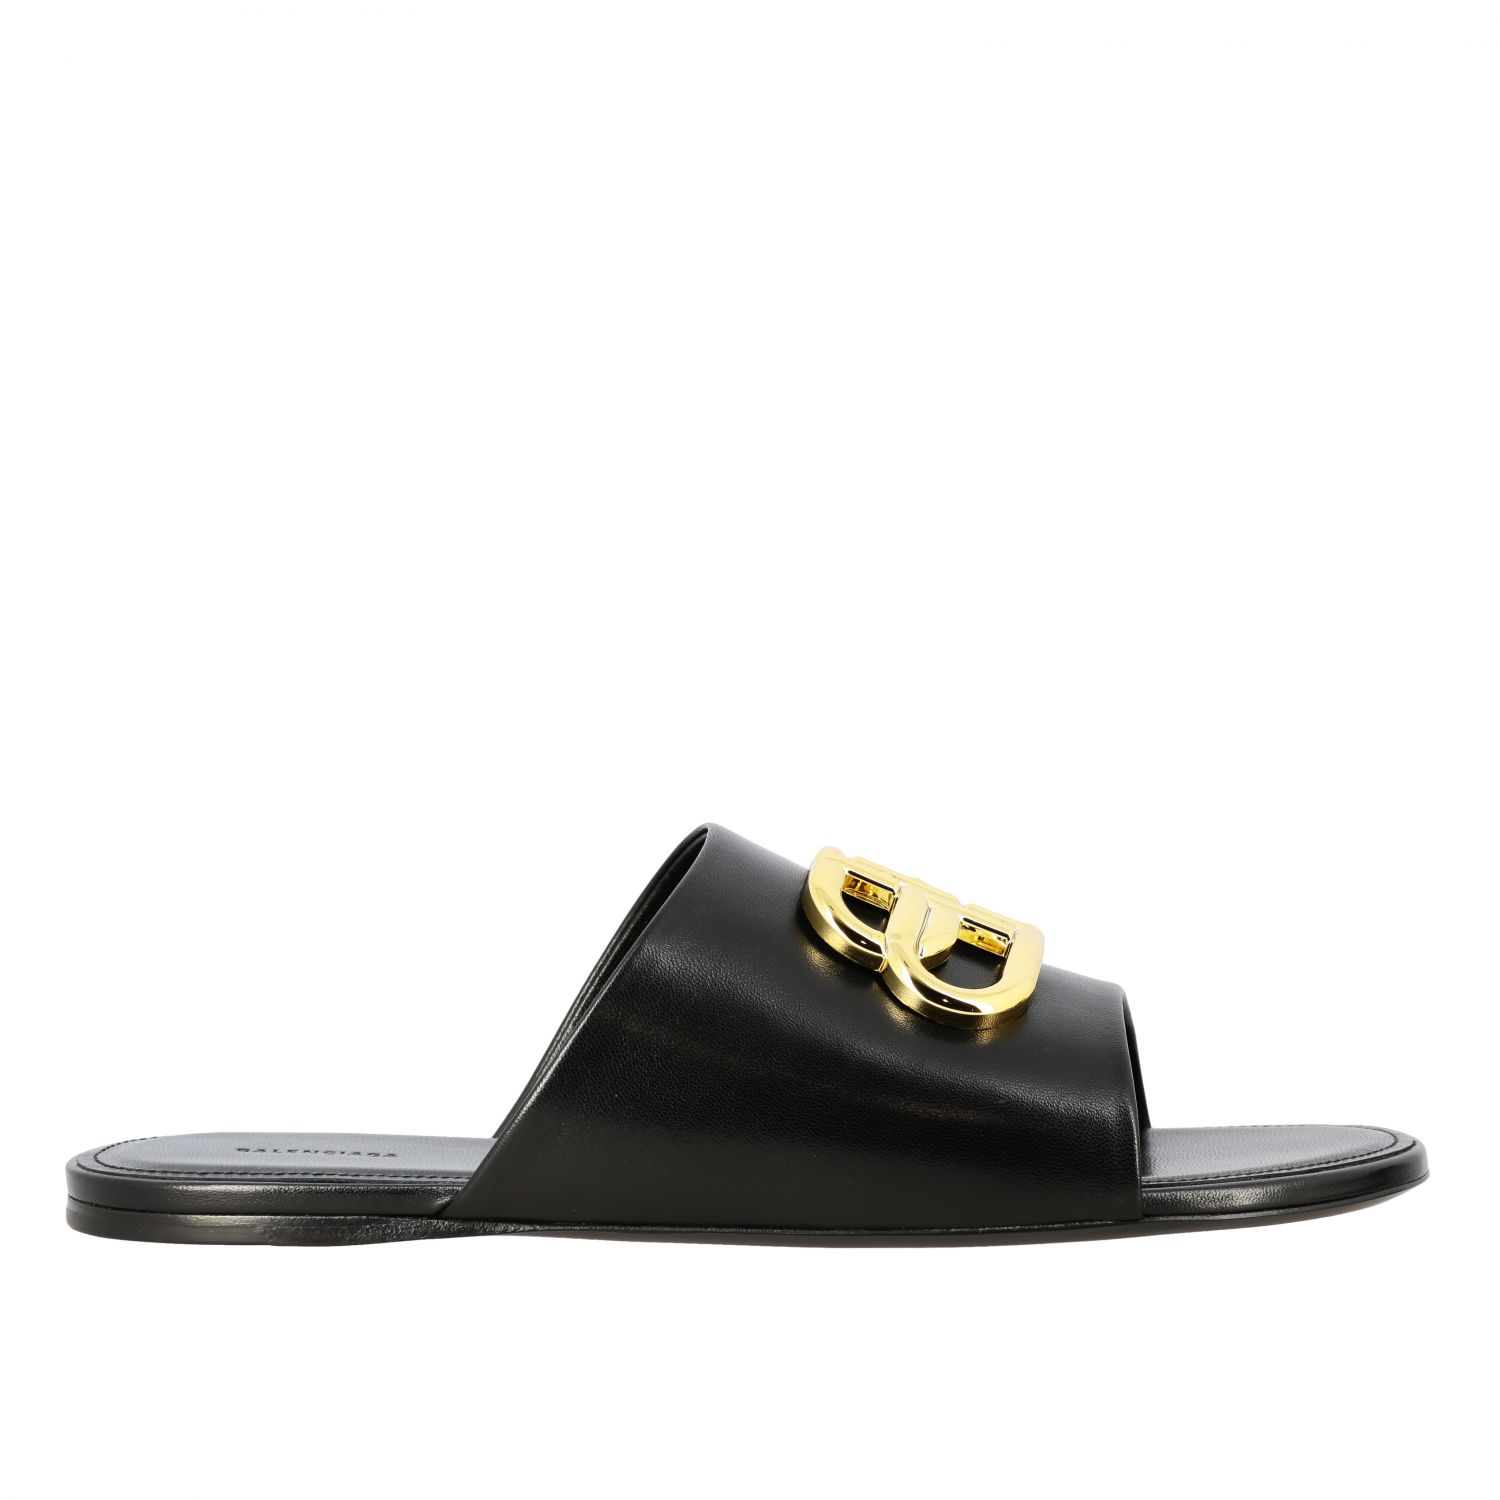 Balenciaga Outlet: Oval BB sandal - Black | Balenciaga flat sandals 604061 WA8F9 GIGLIO.COM